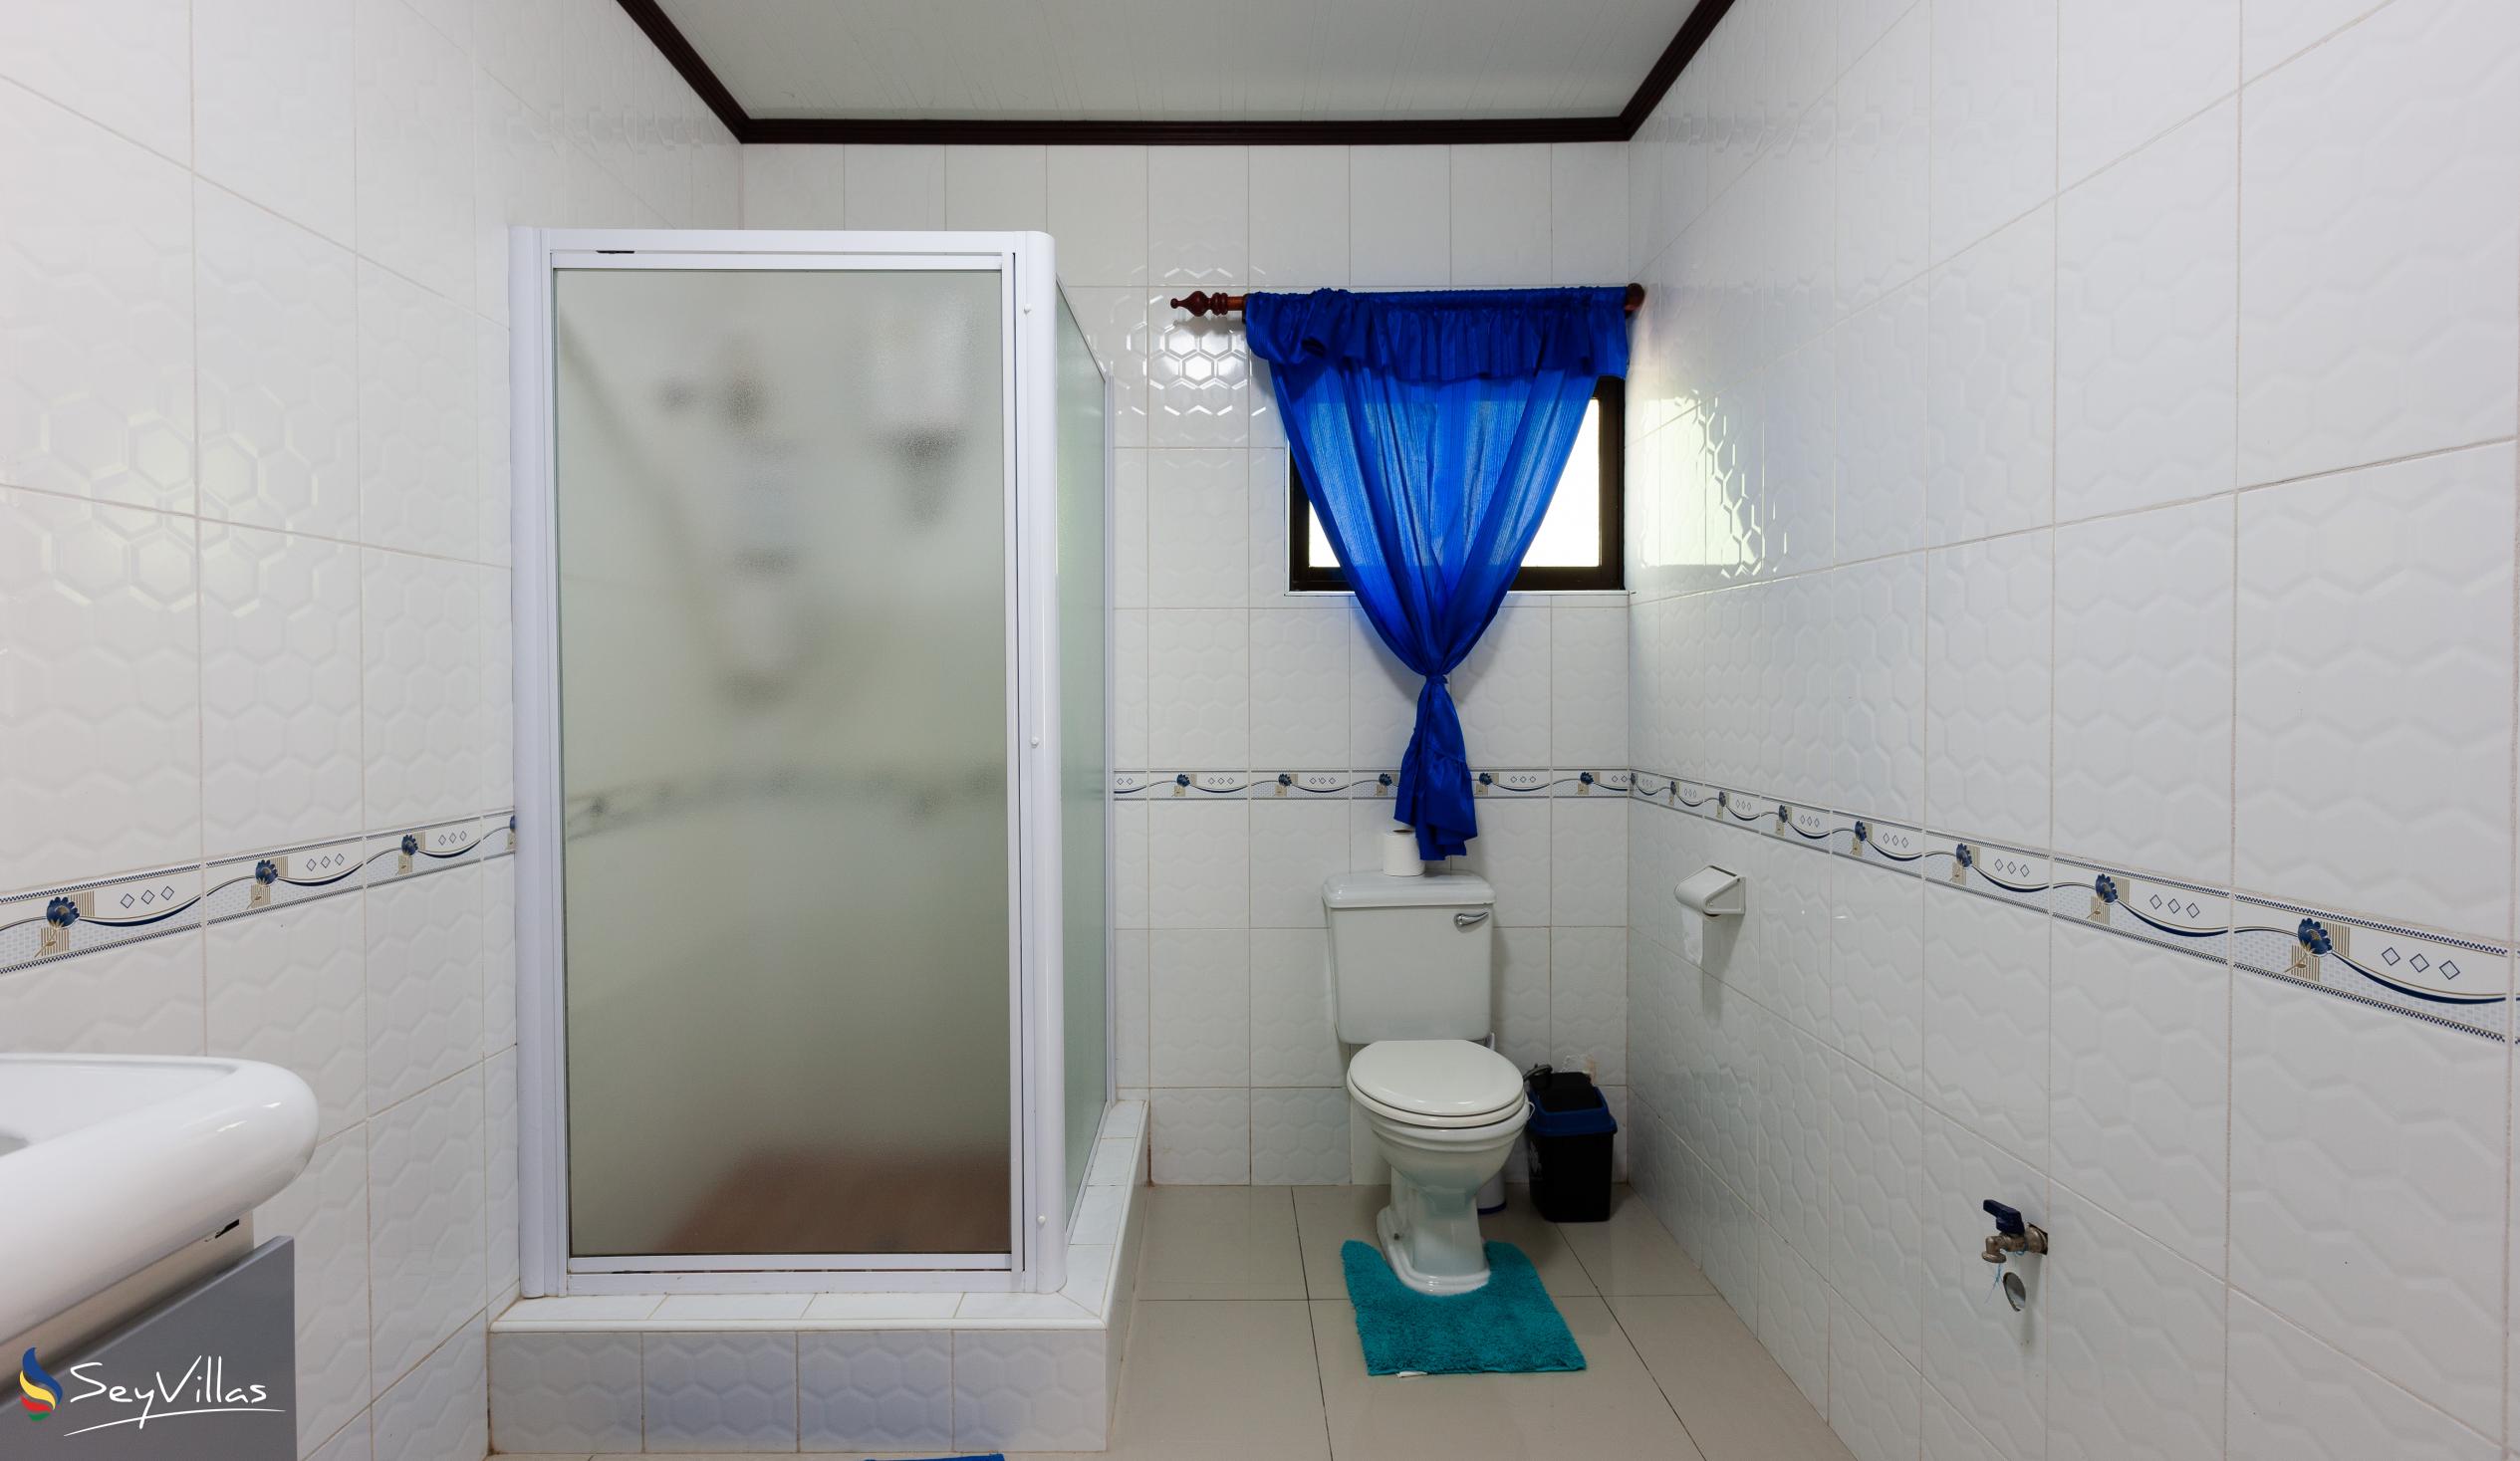 Photo 49: Belle Vacance Self Catering - 1-Bedroom Apartment - Praslin (Seychelles)